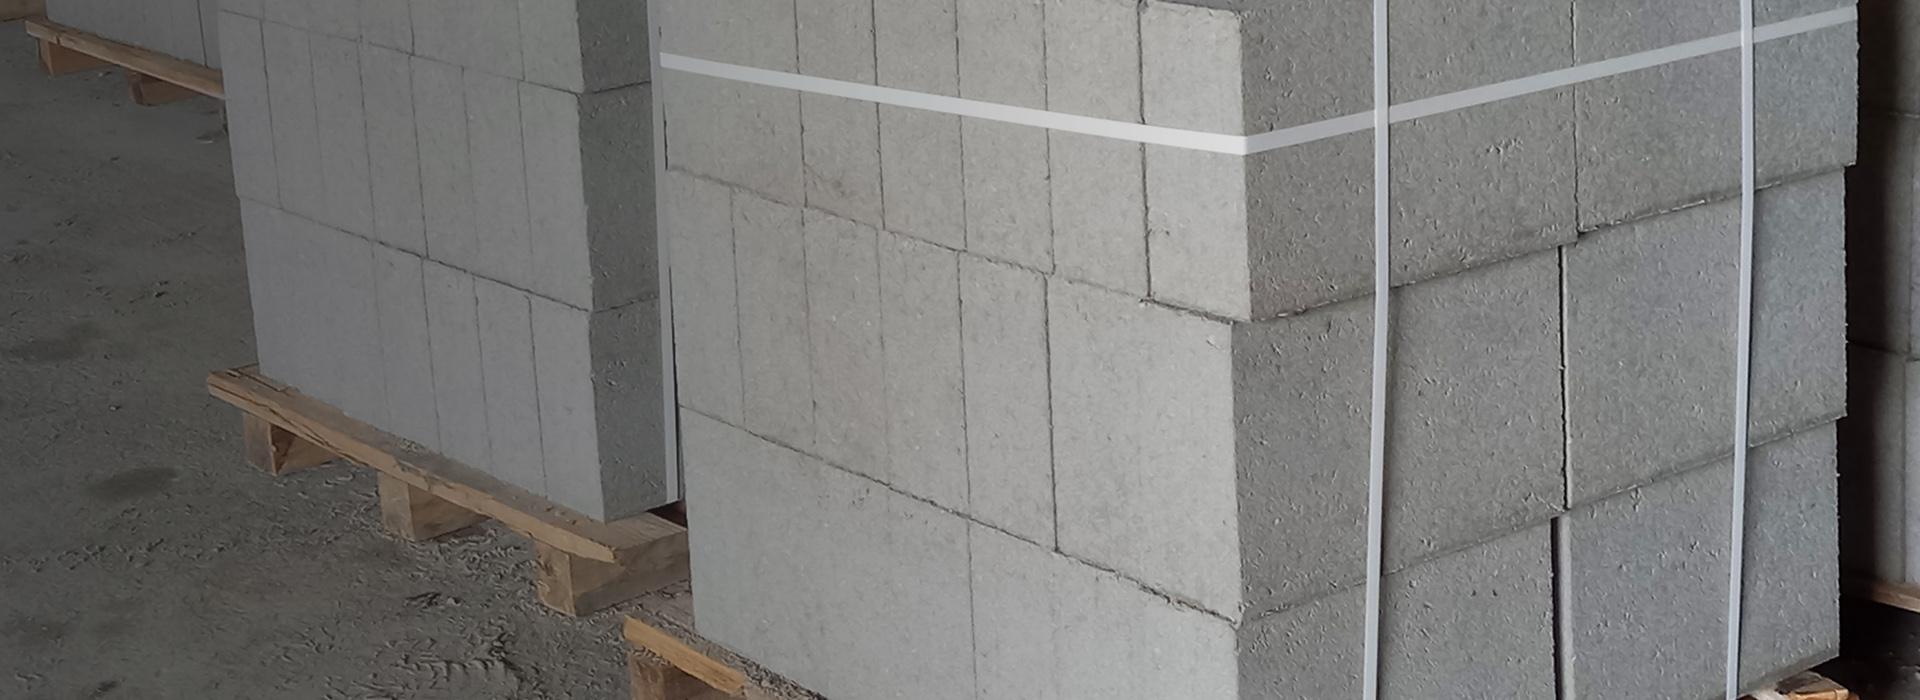 Bloczki betonowe Slajd 1